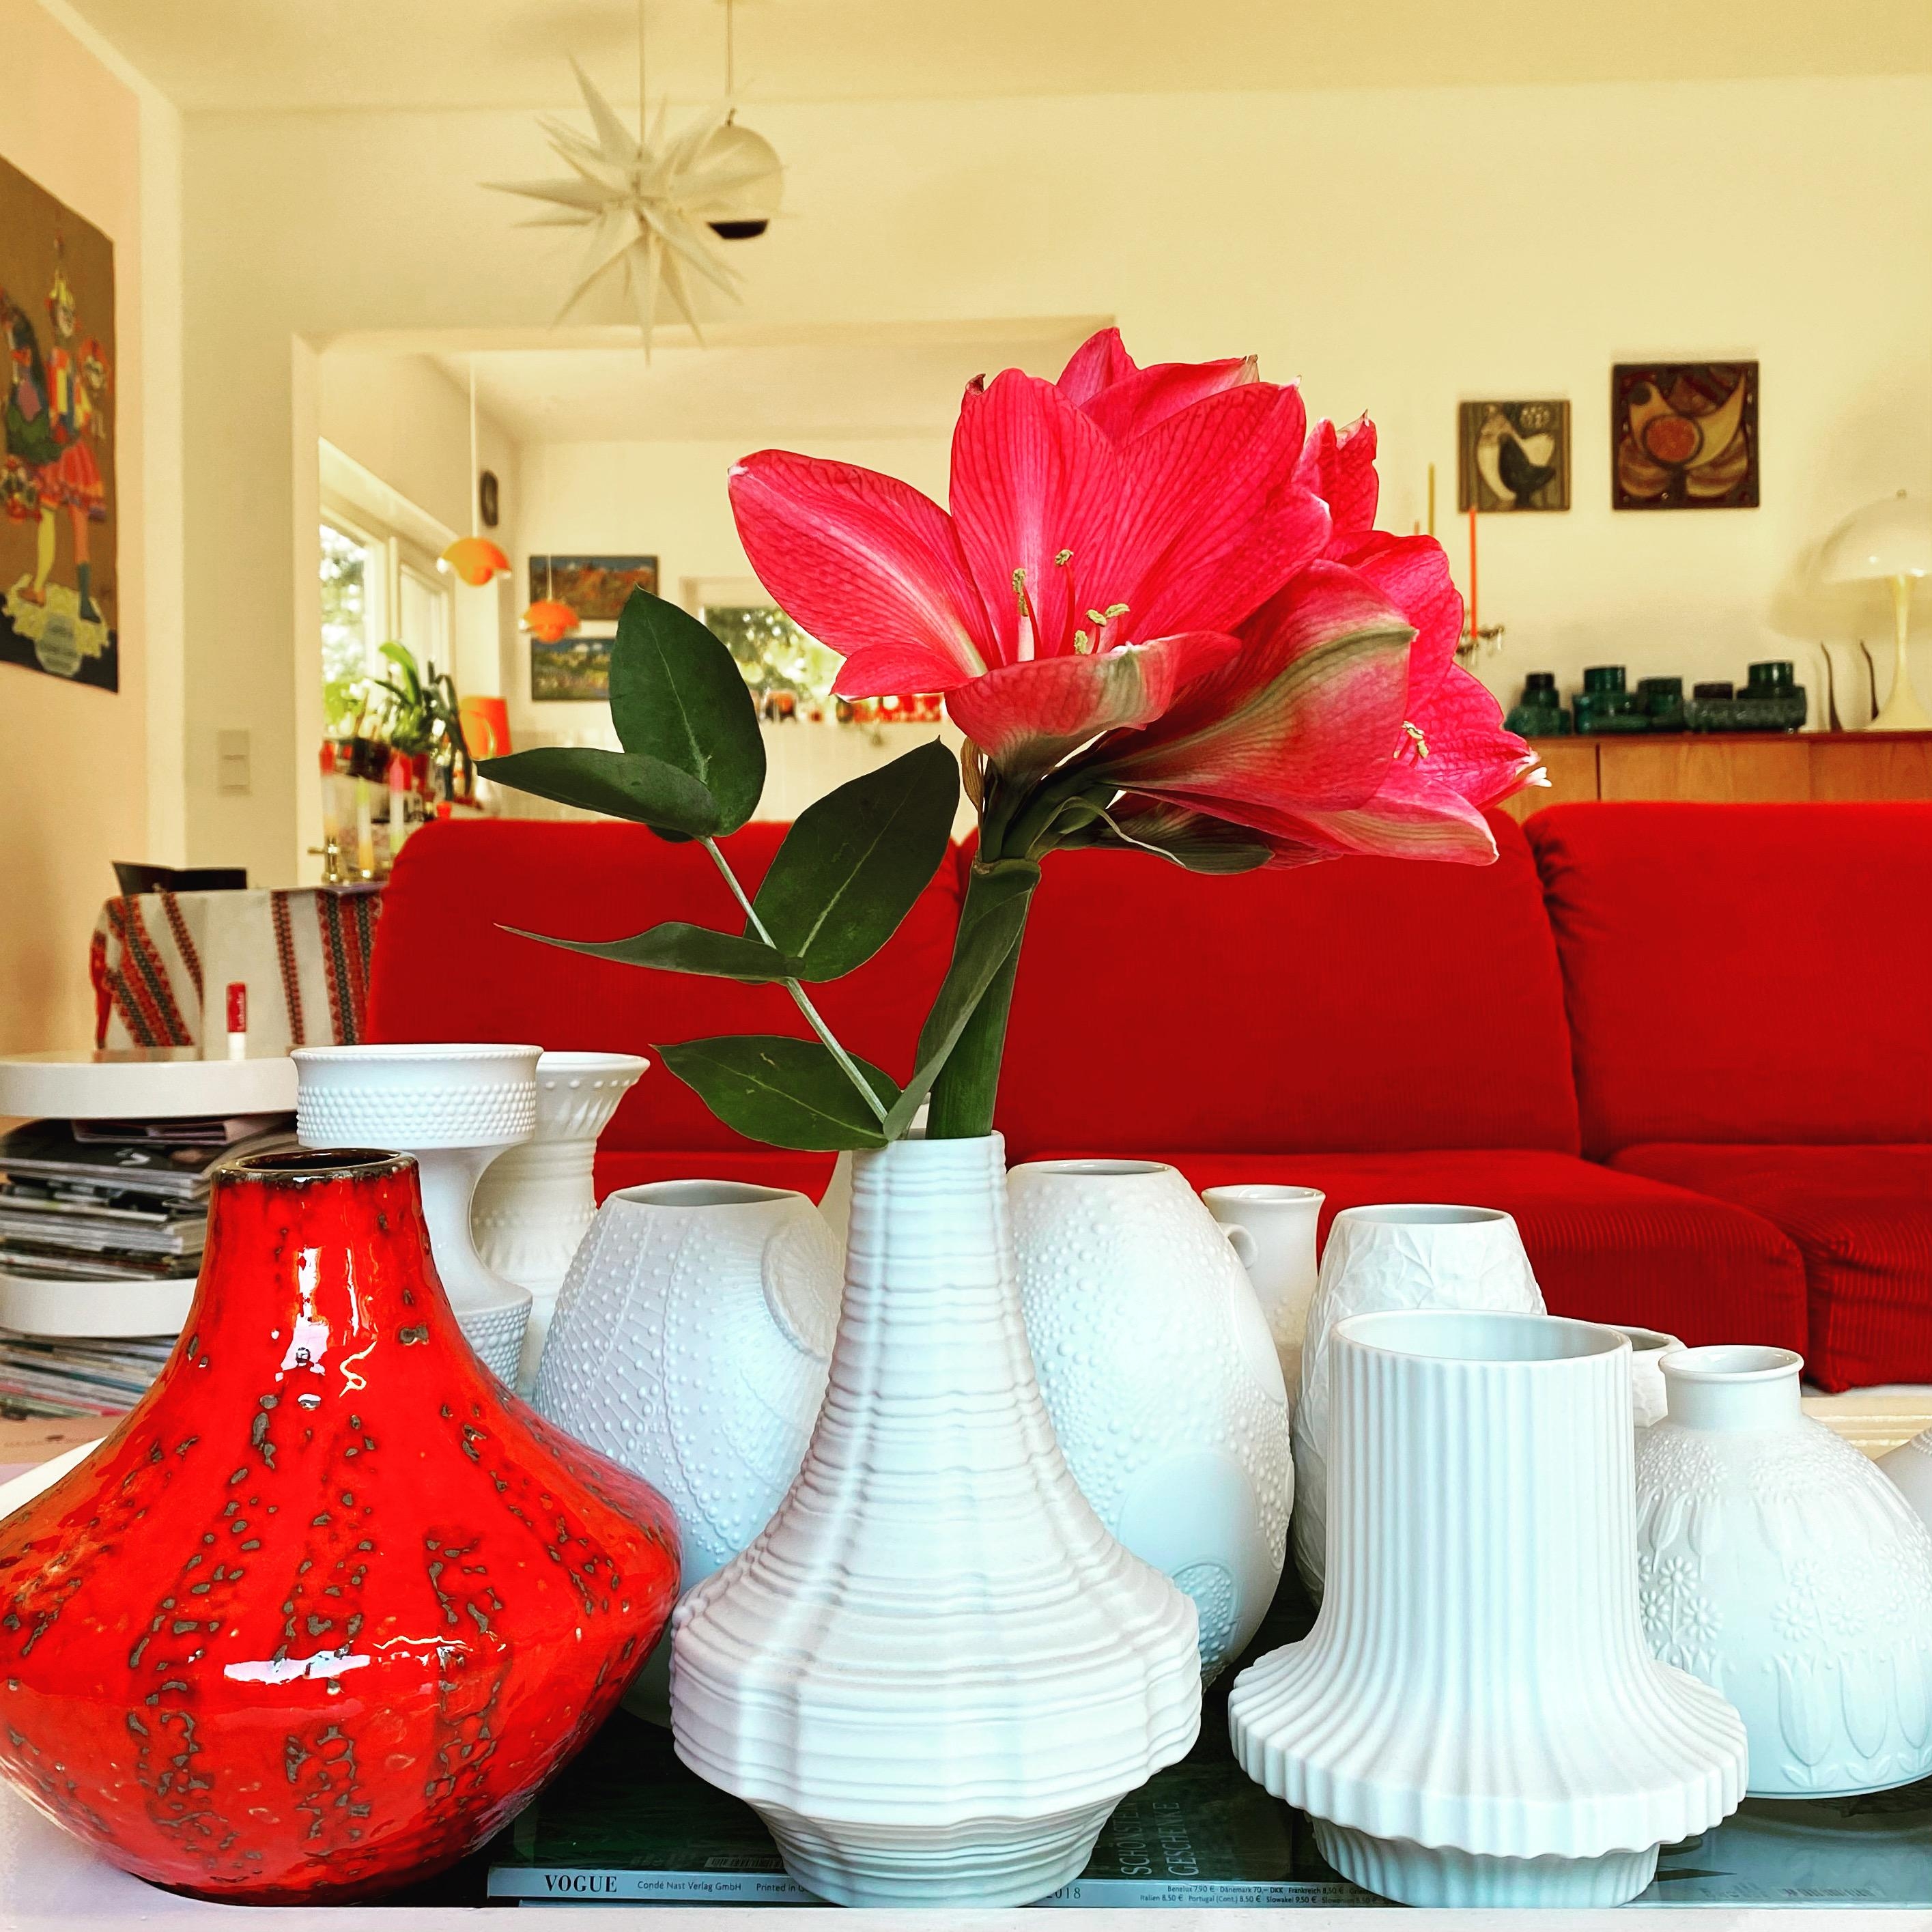 #amaryllis #vase #vasenliebe #colorful #livingroom #flowers